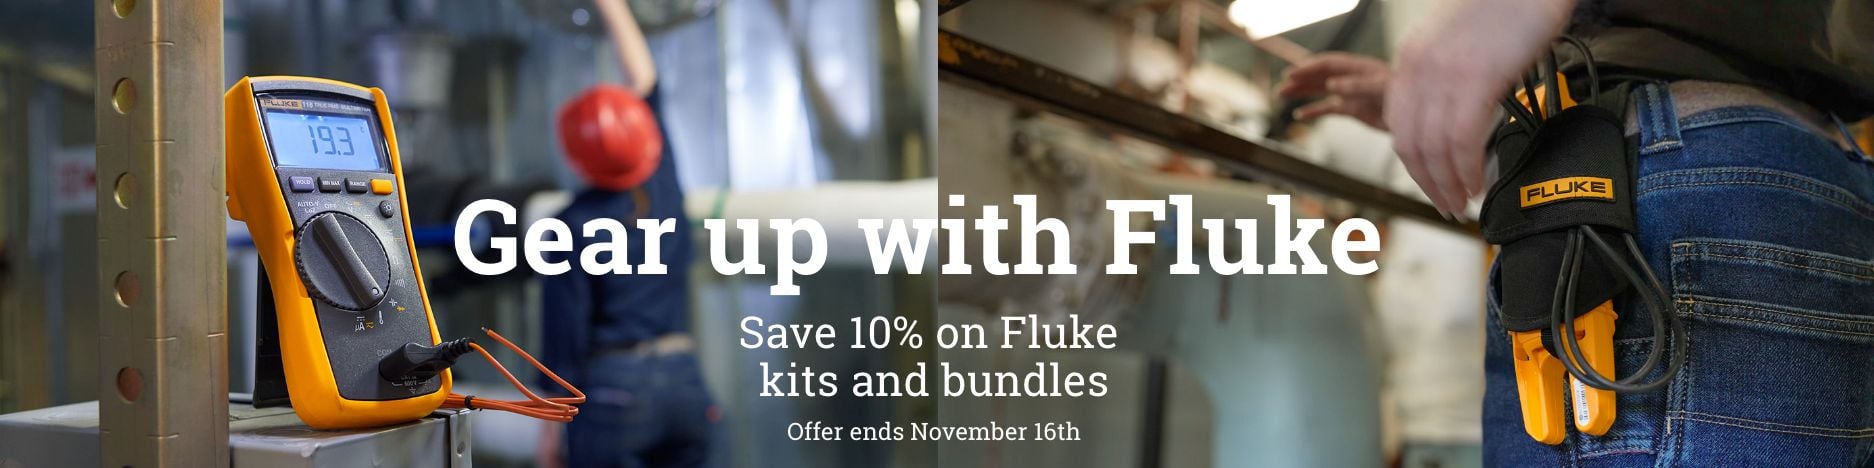 Gear up with Fluke - Save 10% on Fluke kits and bundles